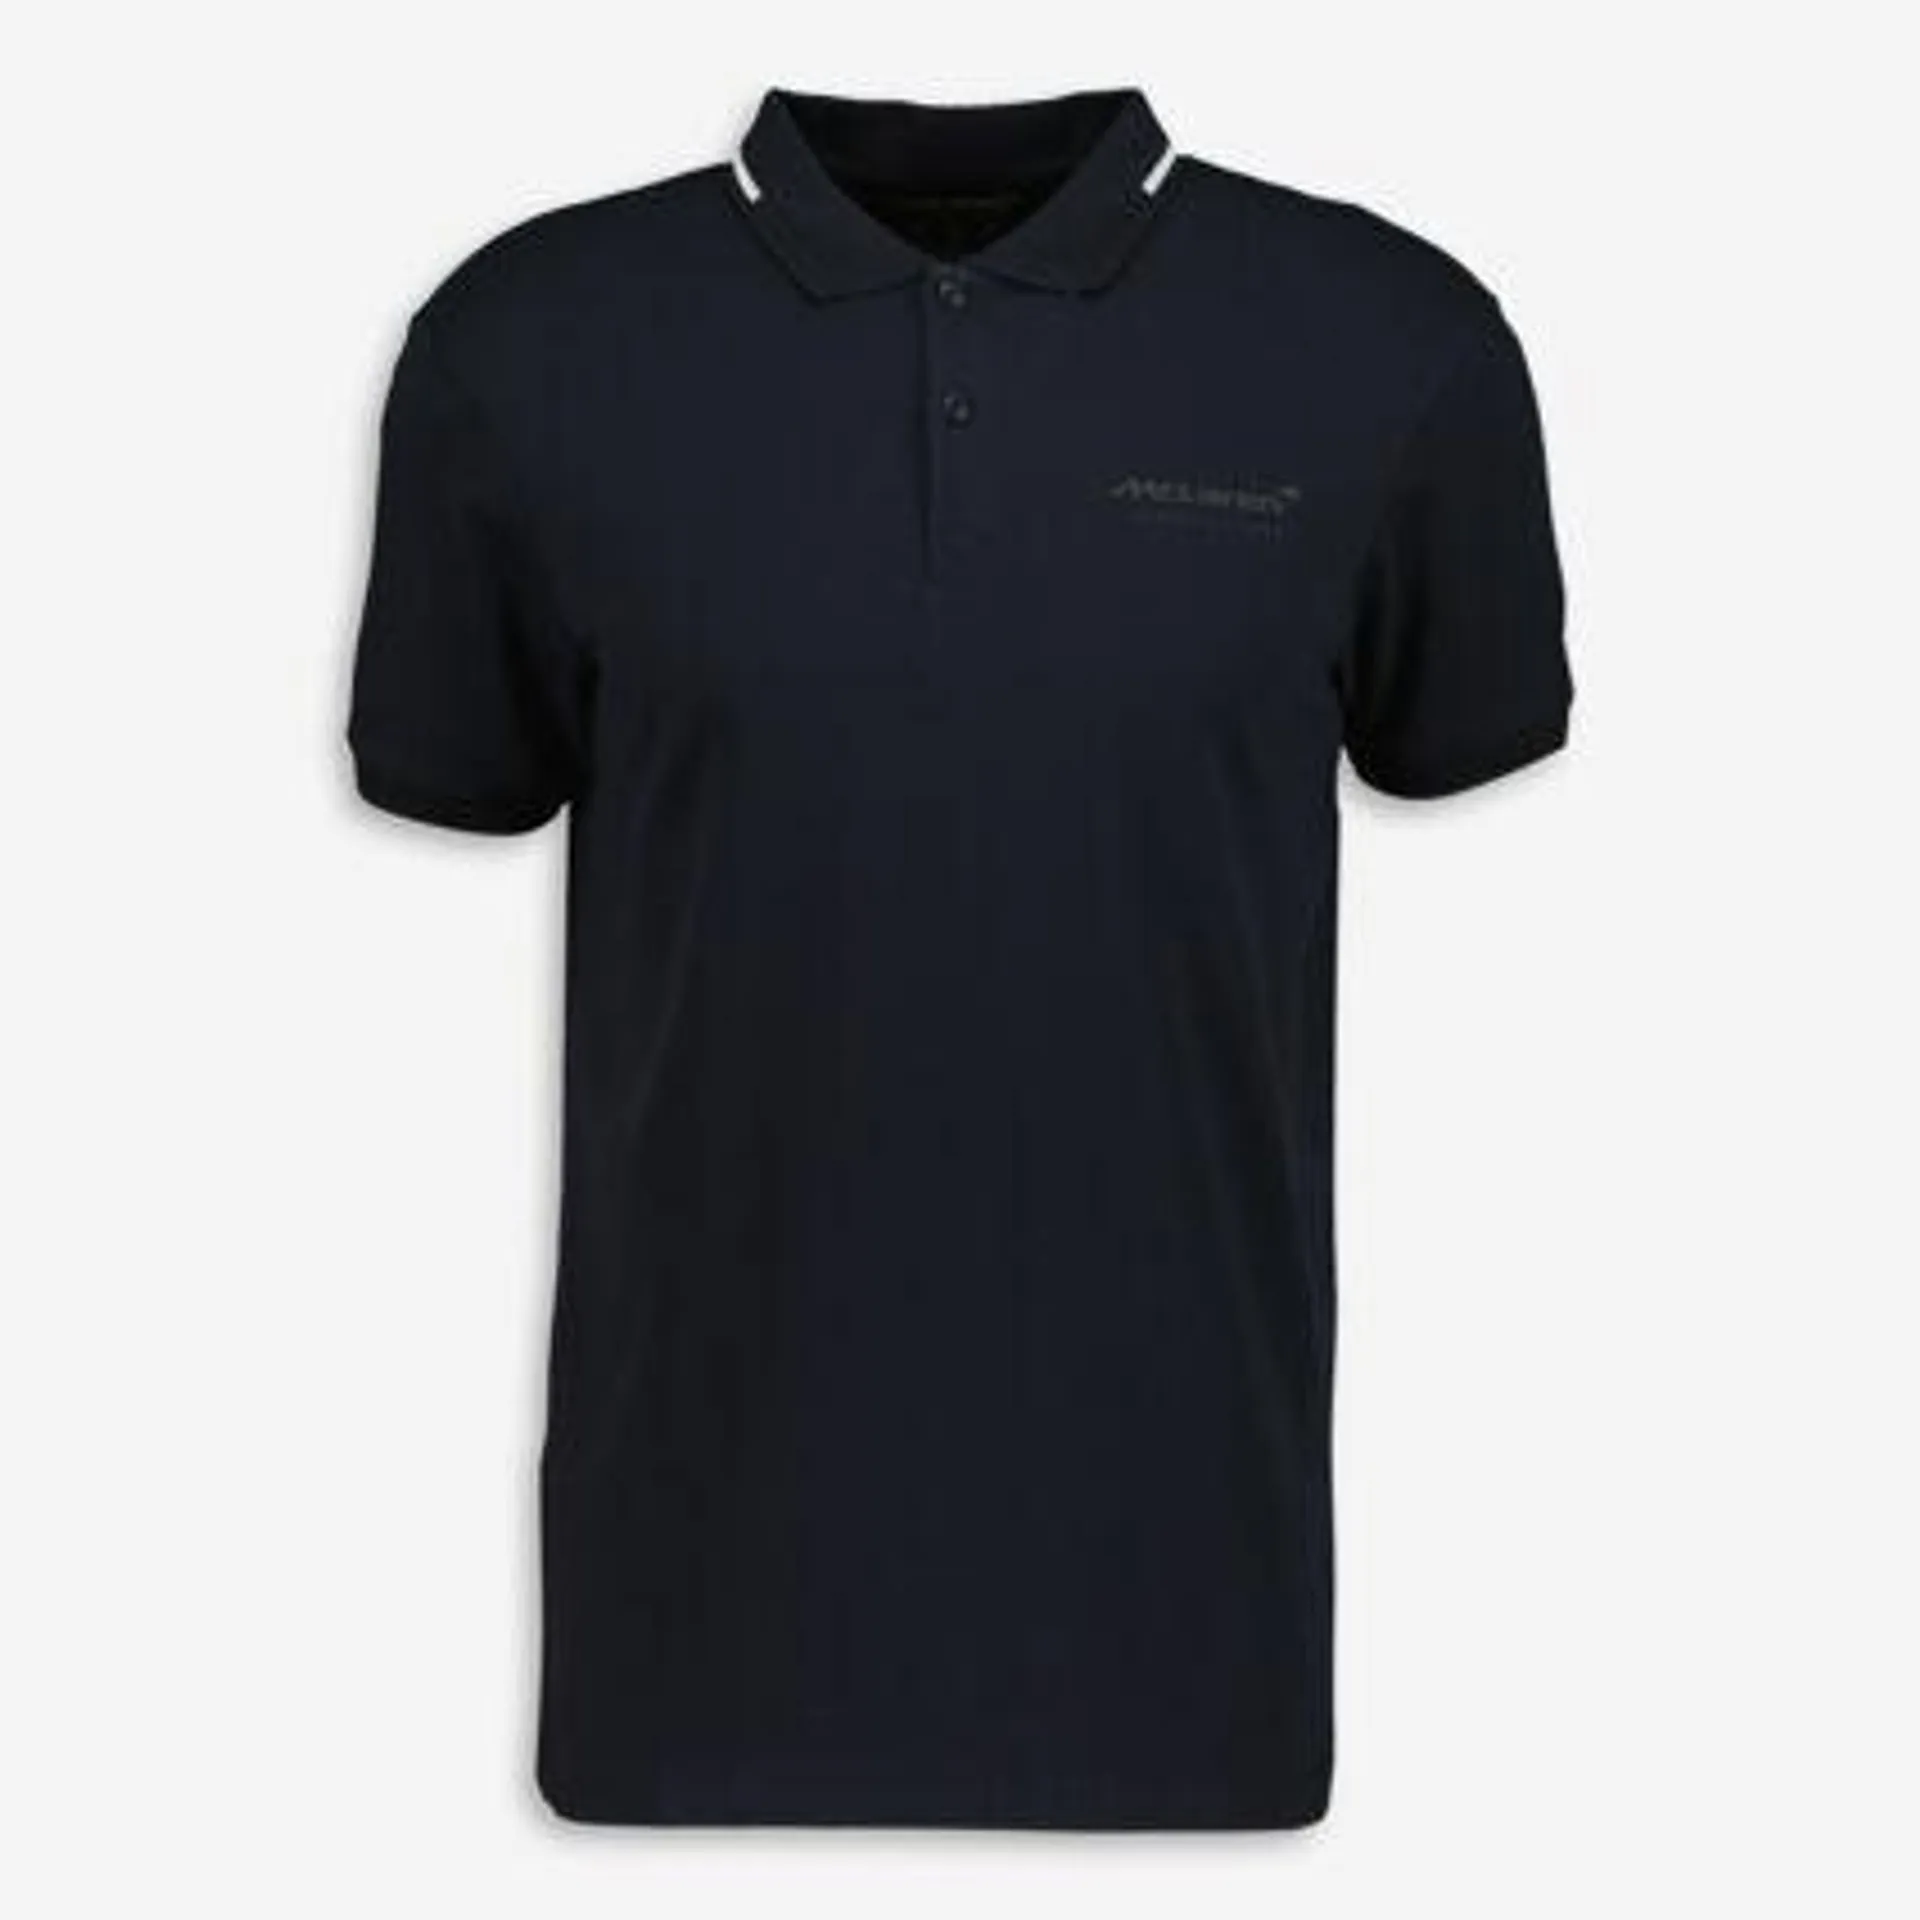 Black Team Core Essentials McLaren Polo Shirt